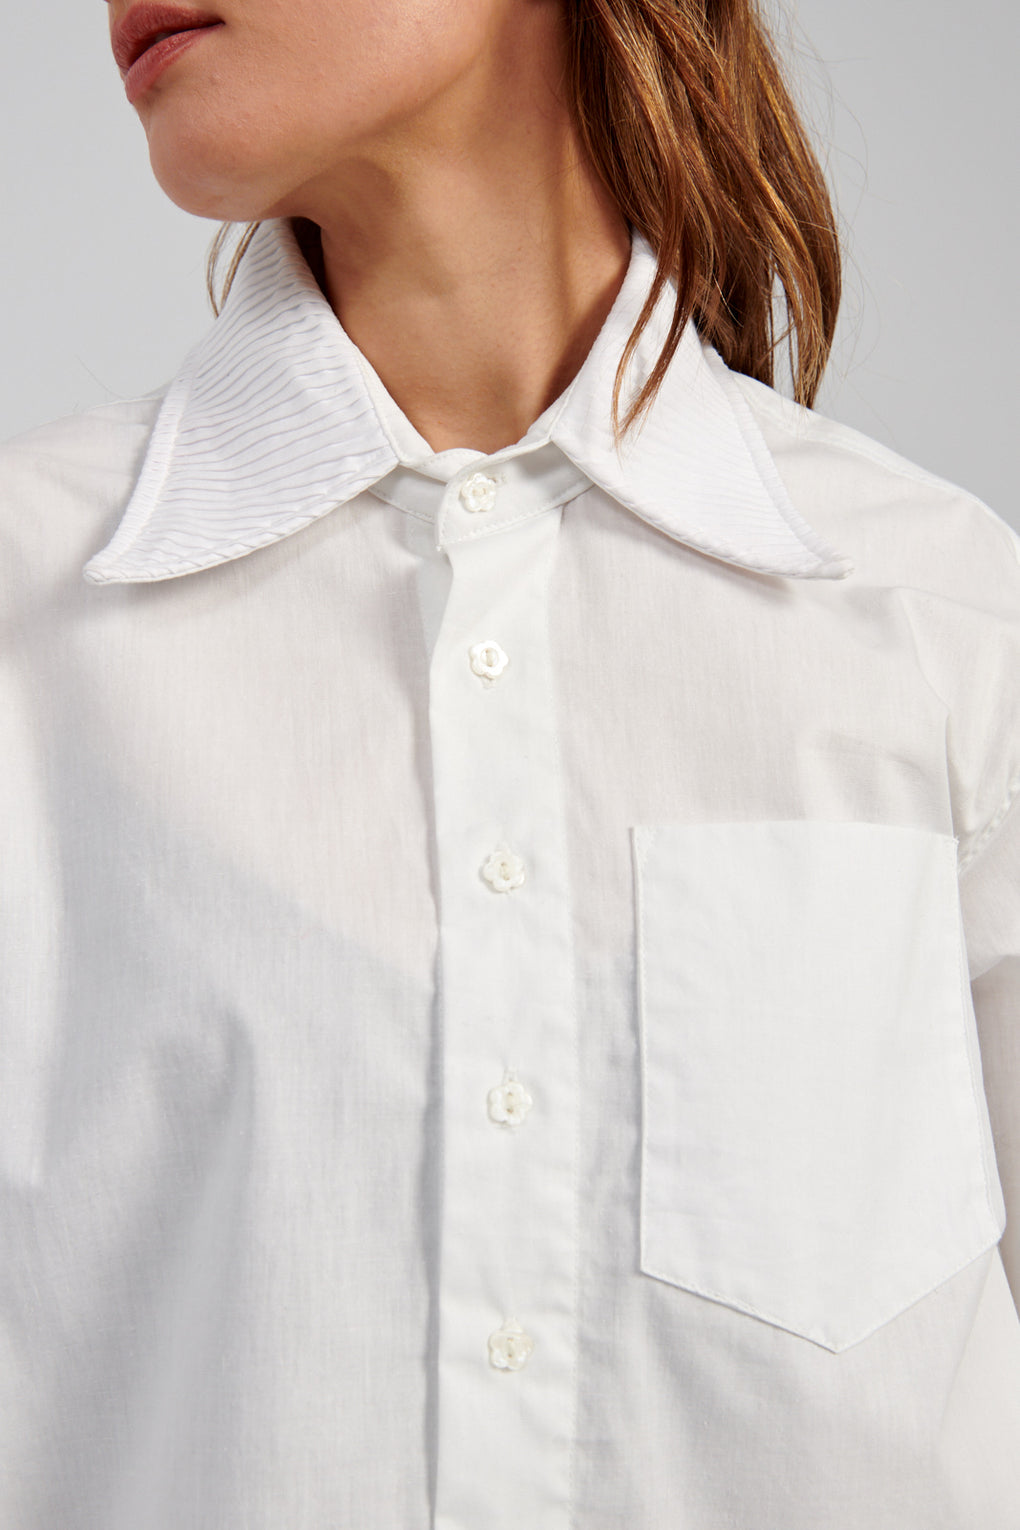 Nin Studio 3D Mantra Shirt white-Nin Studio white button up shirt-Idun-St. Paul